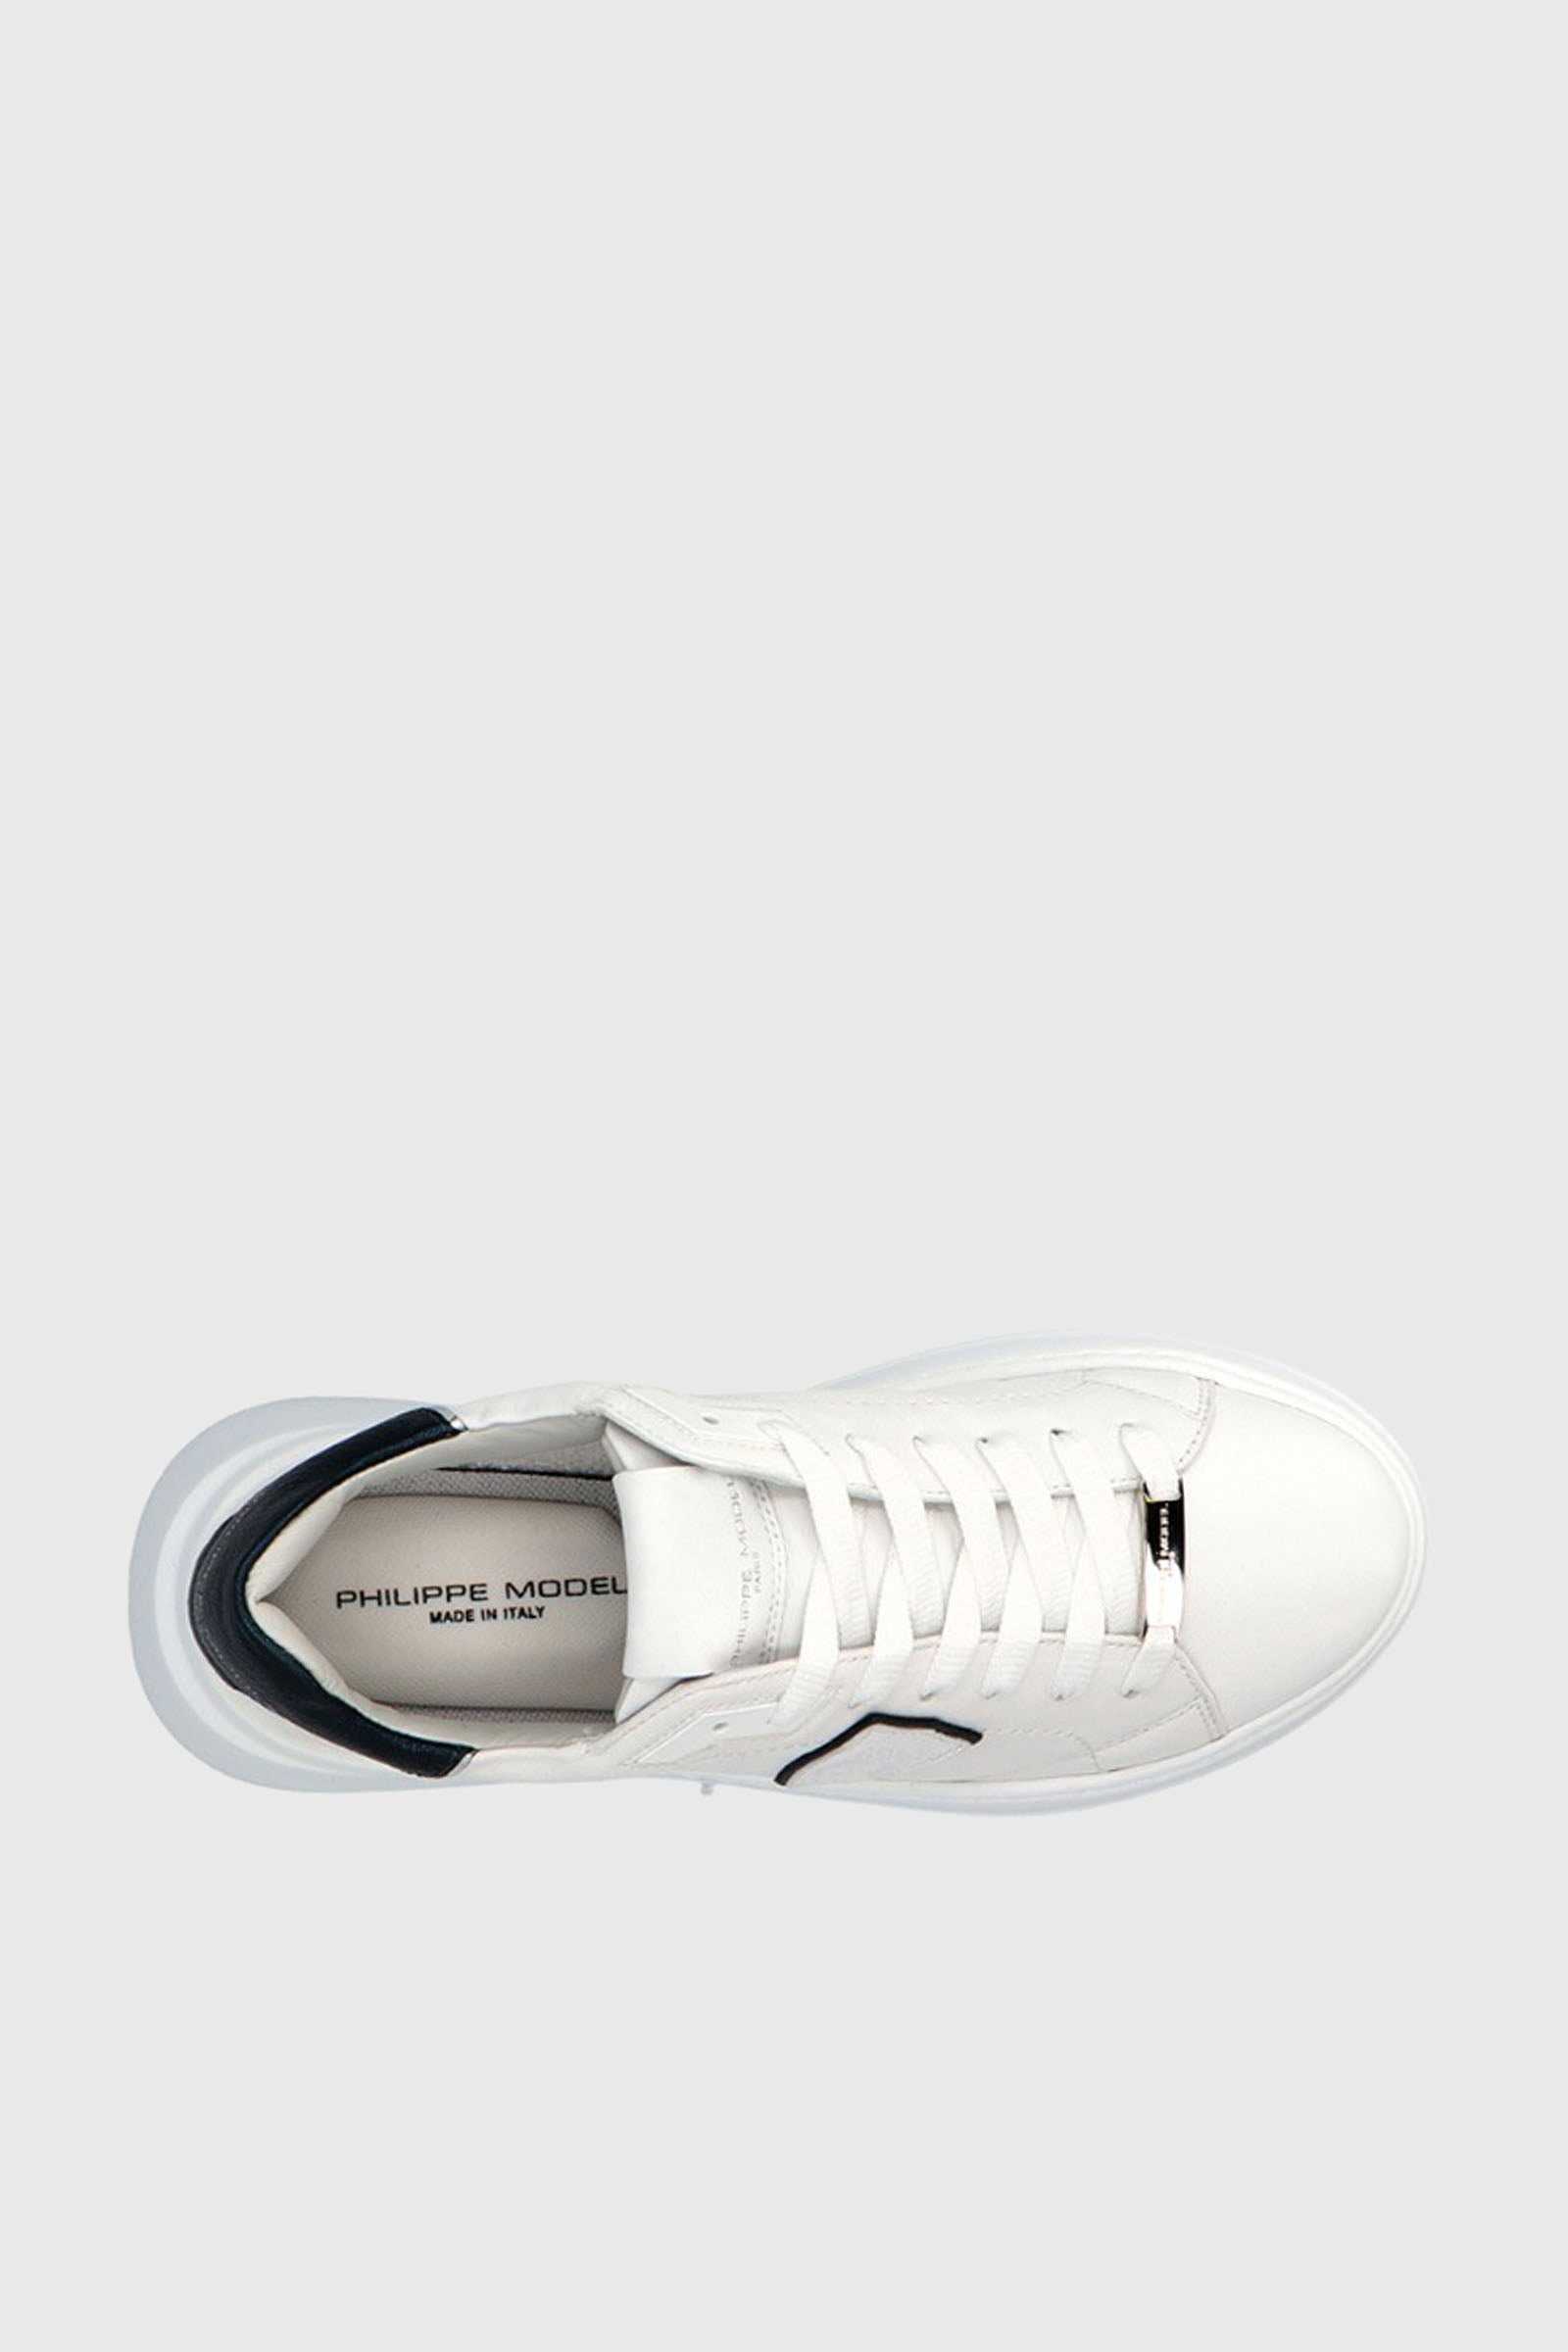 Philippe Model Sneaker Tres Temple Doux Metal Blanc Noir Bianco/nero Donna - 5